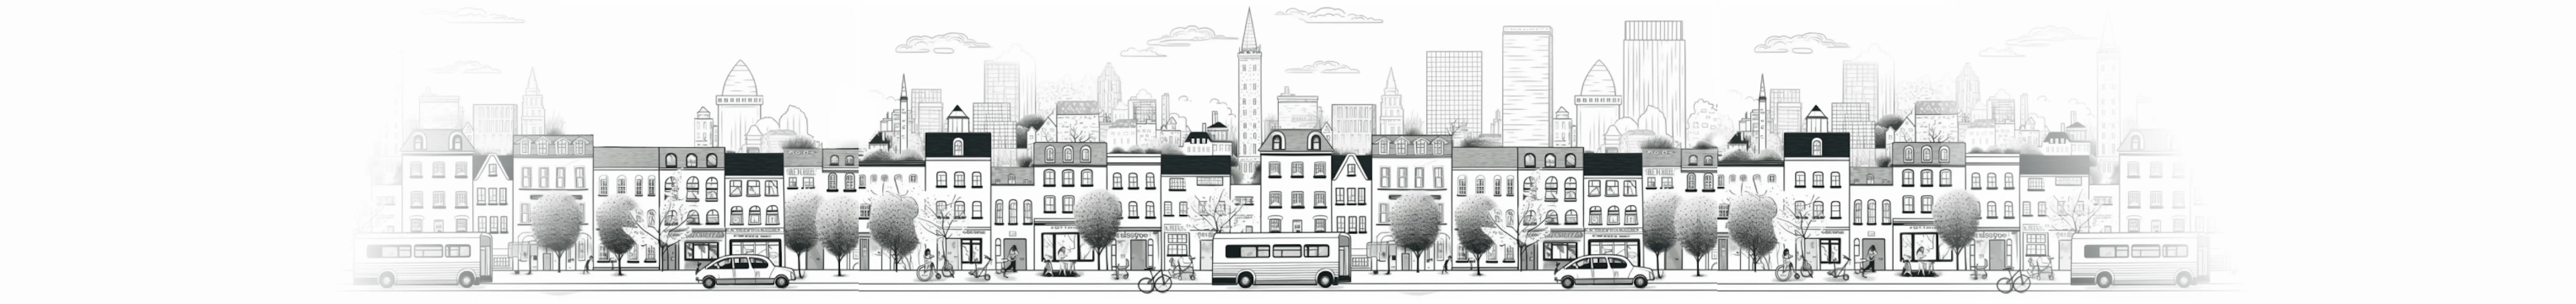 City scape illustration